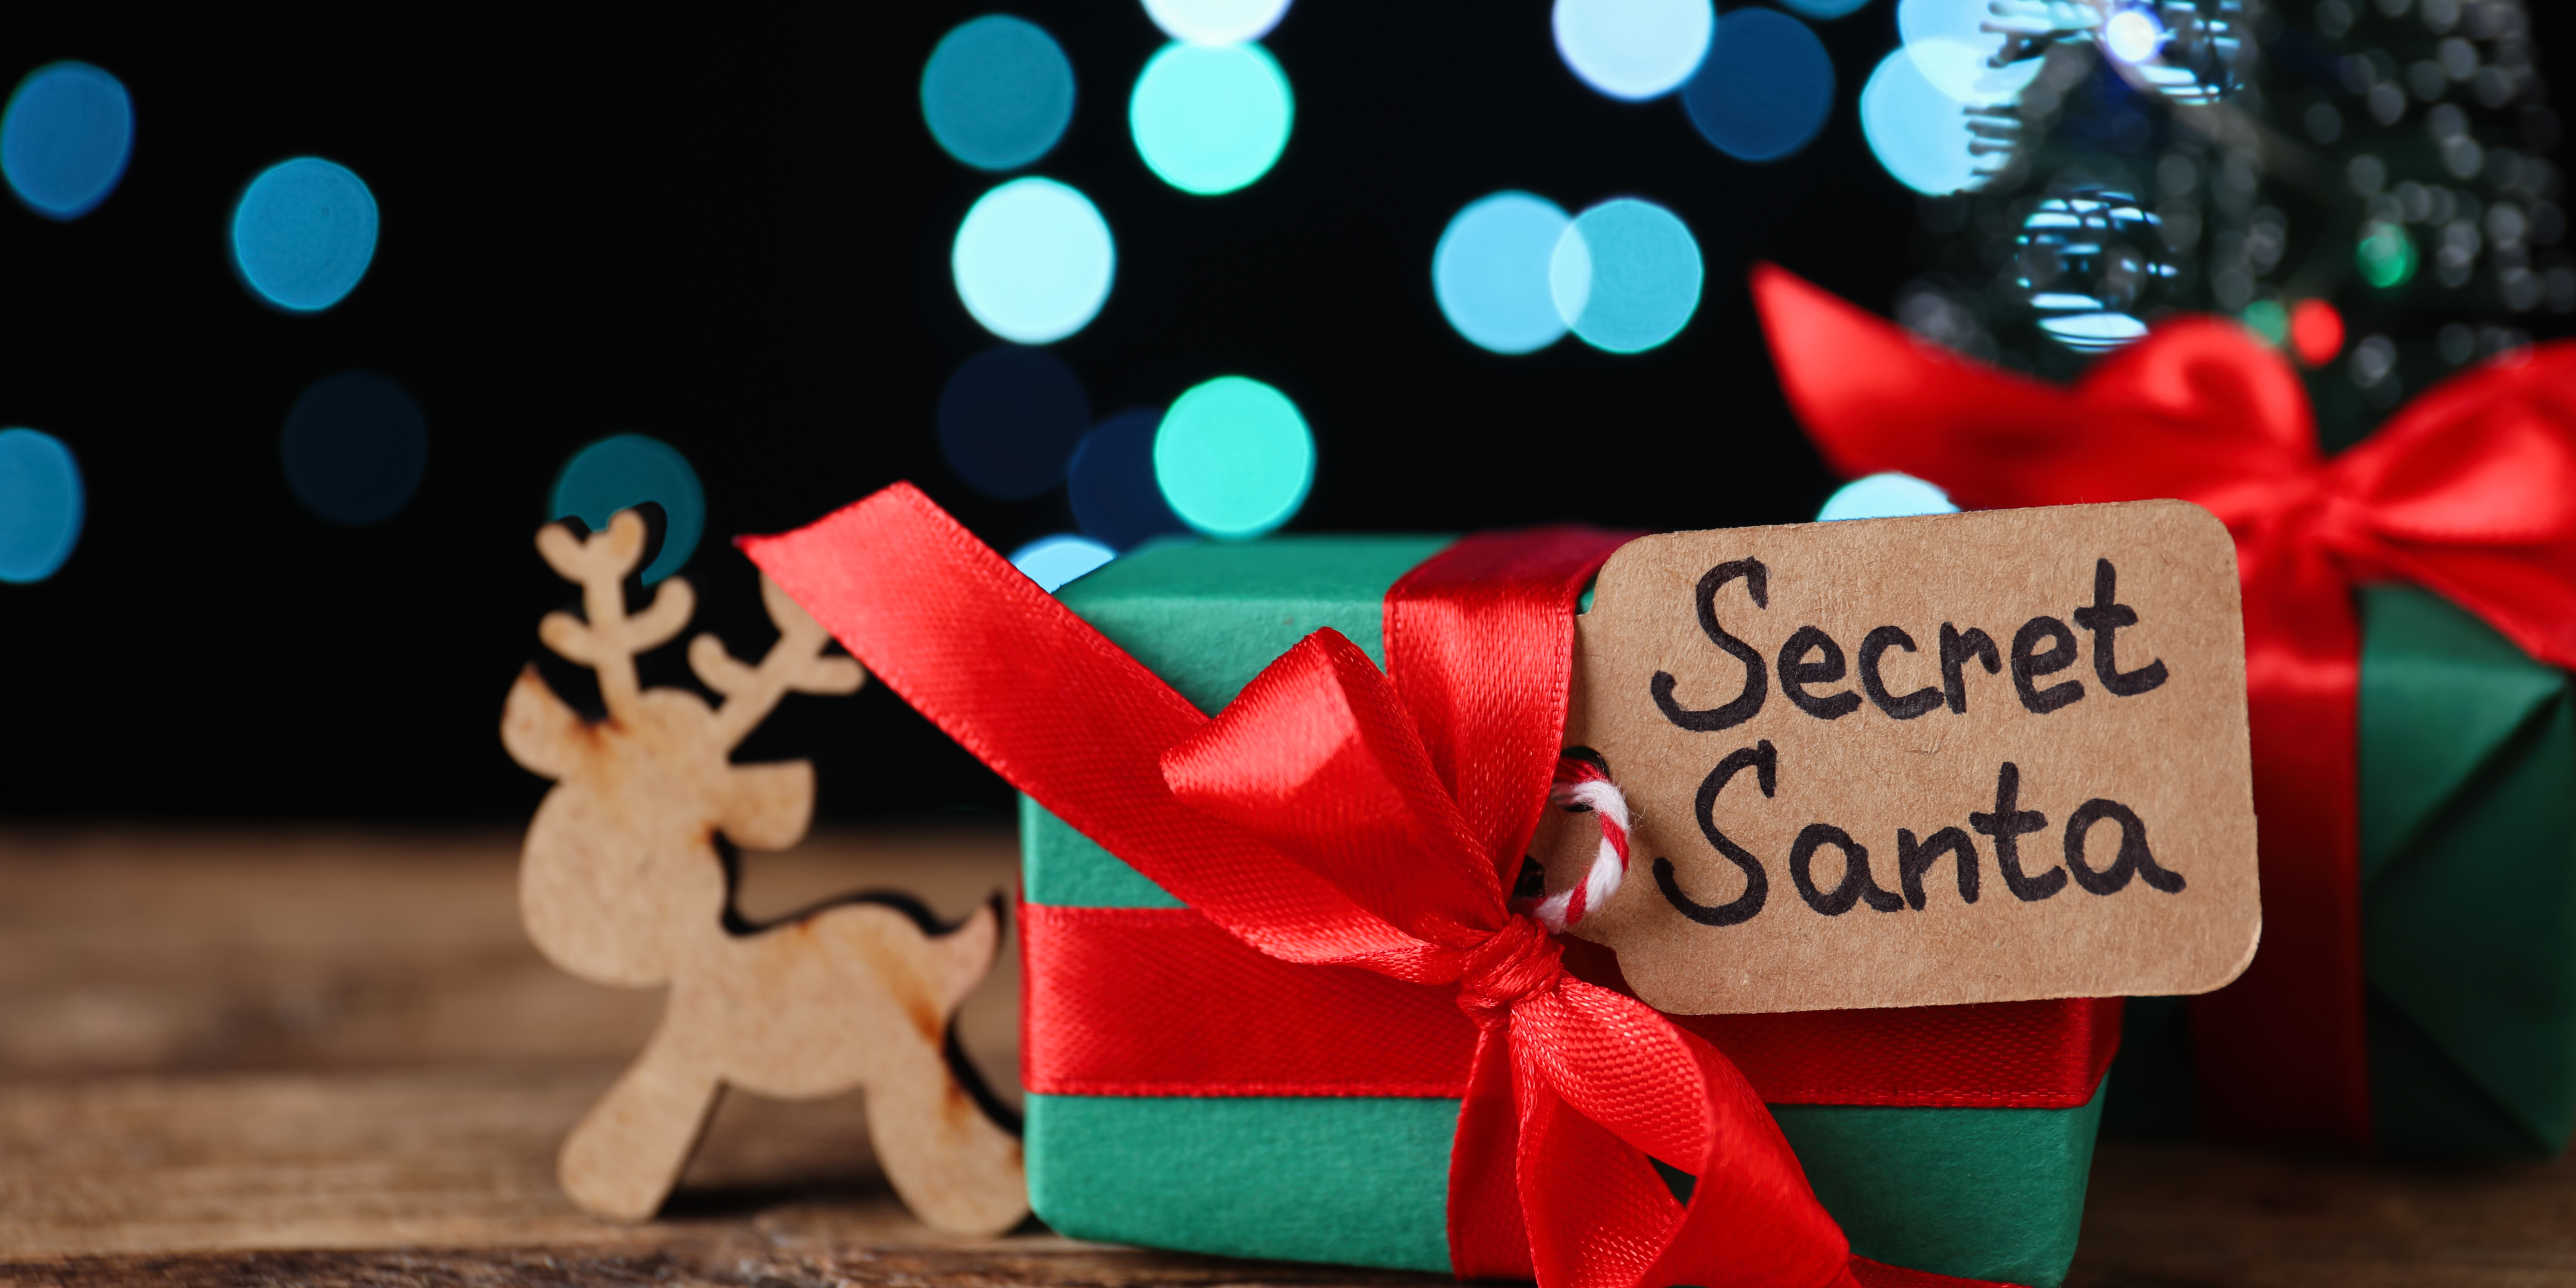 5 eco-friendly gift ideas for 15 euros for a successful Secret Santa